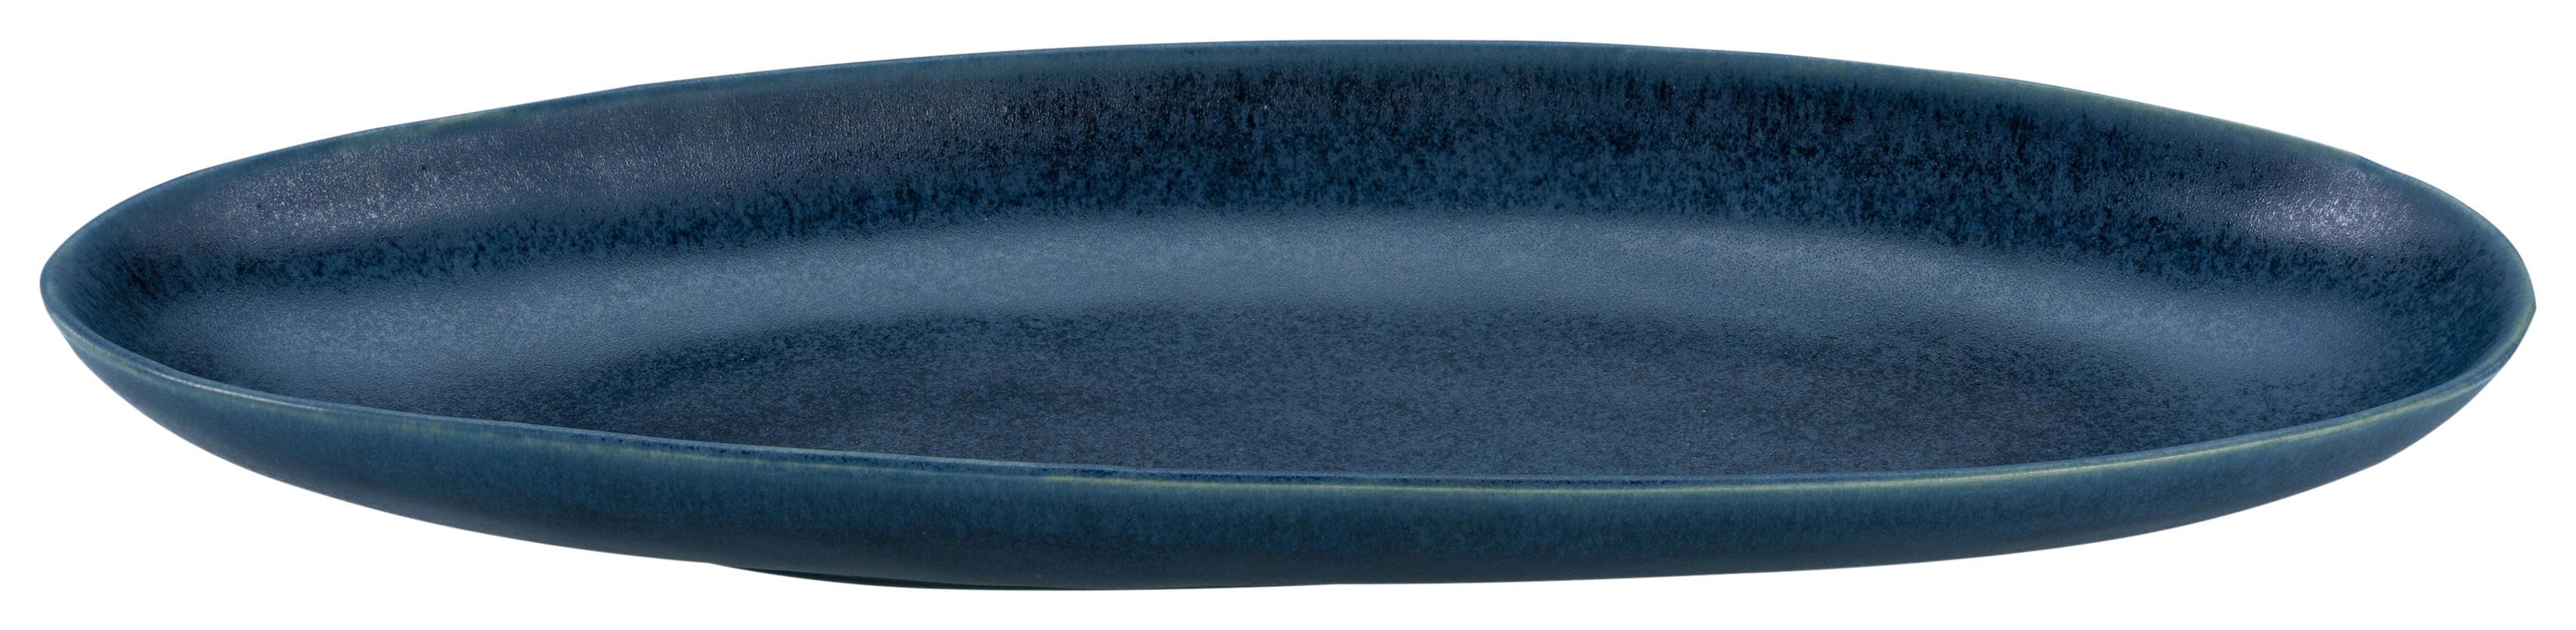 Servírovacia Tácka Gourmet-M, Ø: 35cm - modrá, Moderný, keramika (35,5/15/3,5cm) - Premium Living